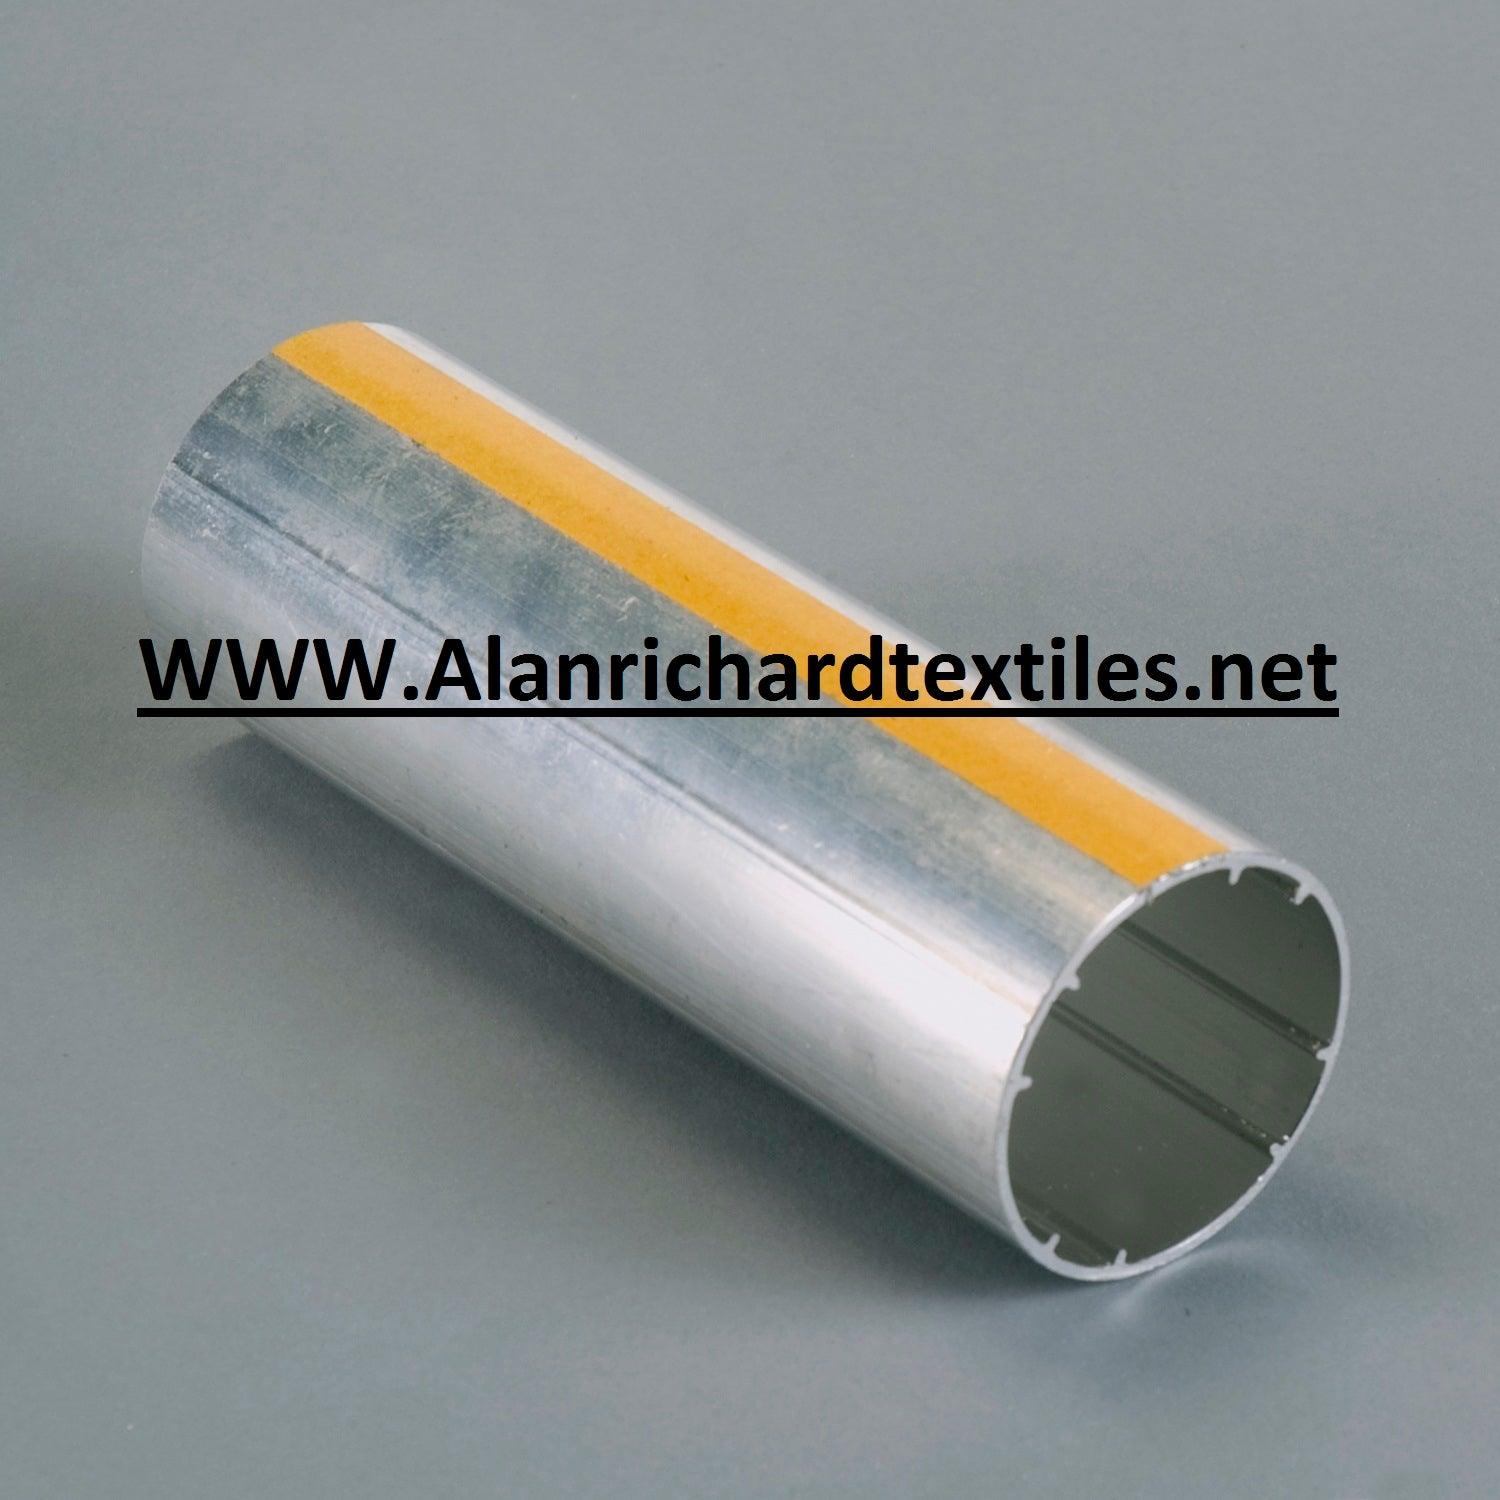 2-1/2" Clutch Tube - Alan Richard Textiles, LTD Clutch Tubes, Rollease Battery Motors & Remote Controls